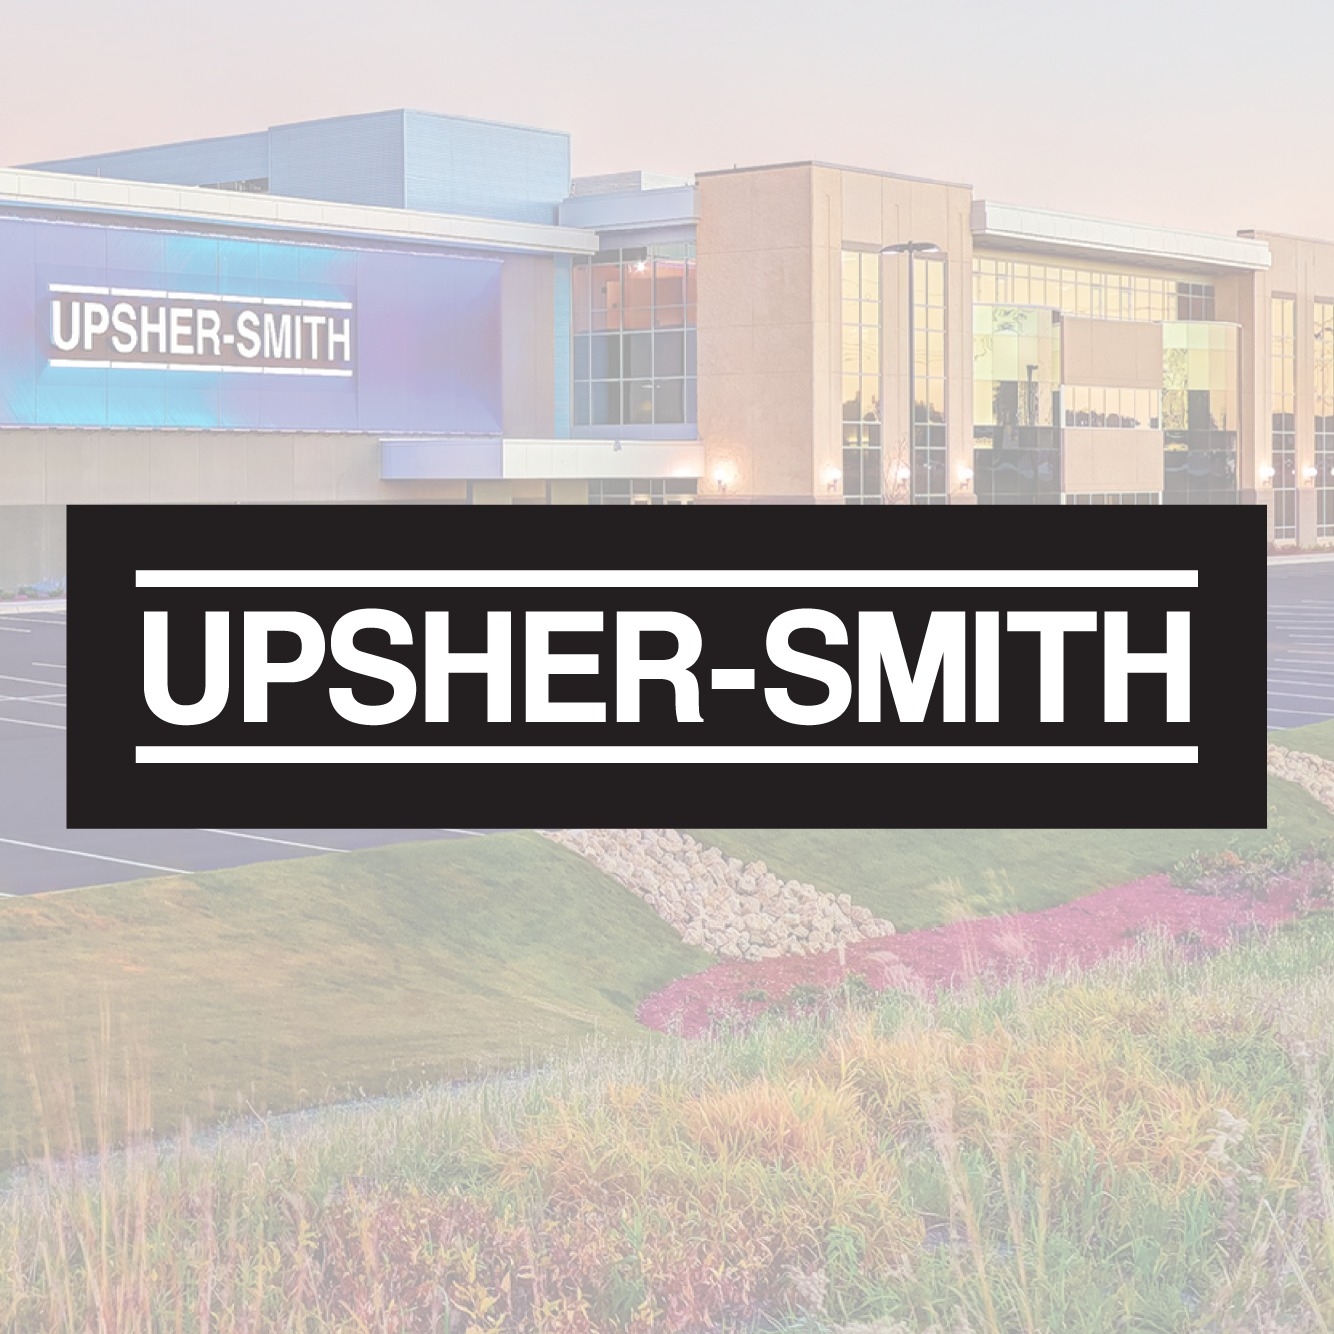 Upsher-Smith Laboratories